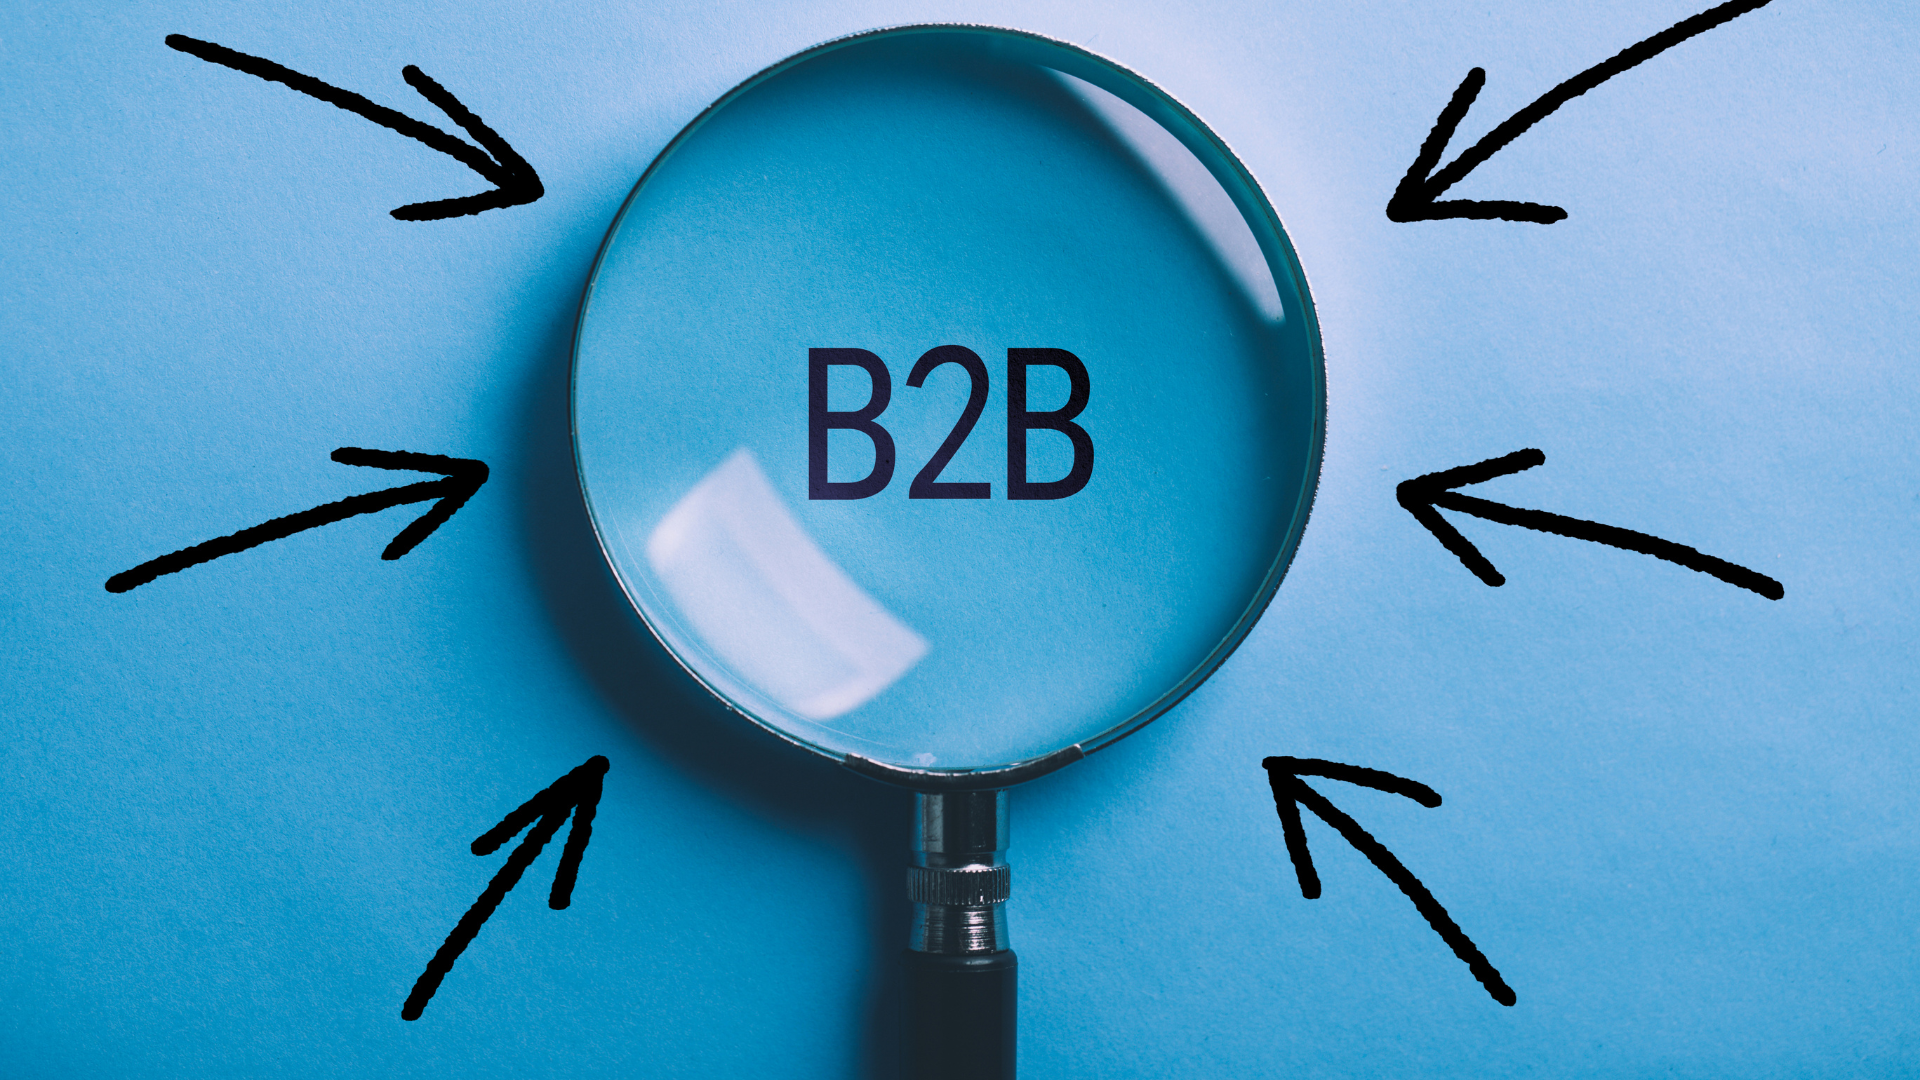 Las mejores estrategias de SEO para B2B - Bizmarketing